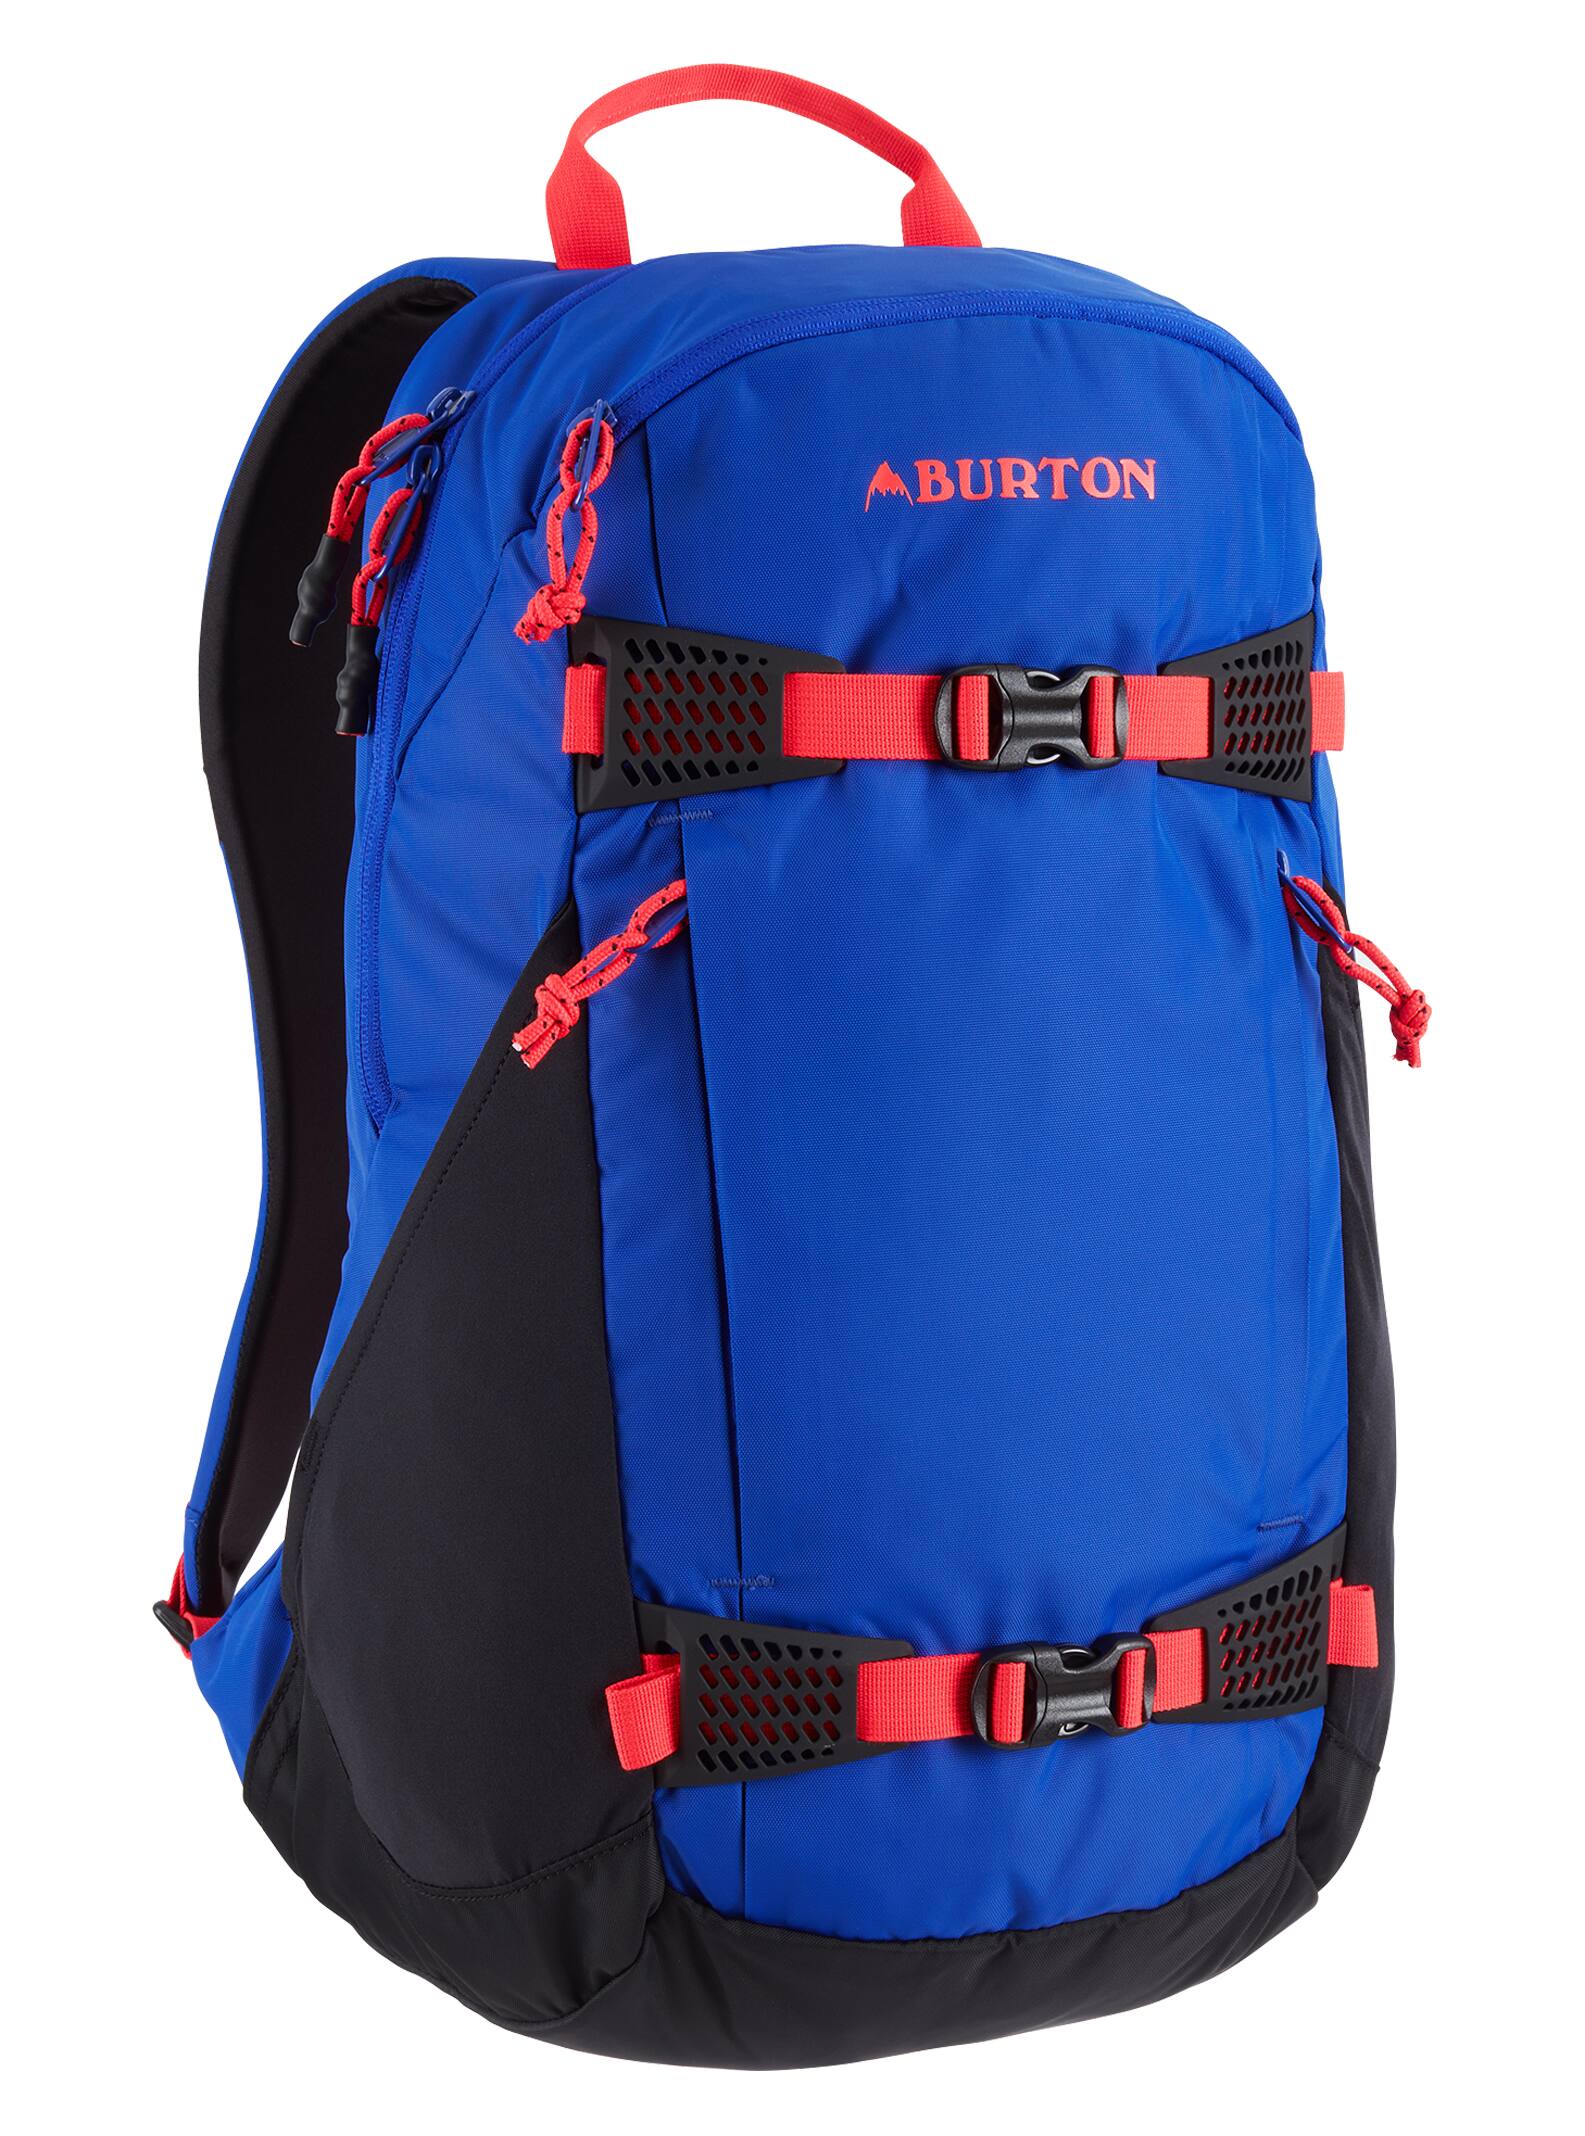 Hiking Backpacks | Burton Snowboards LV